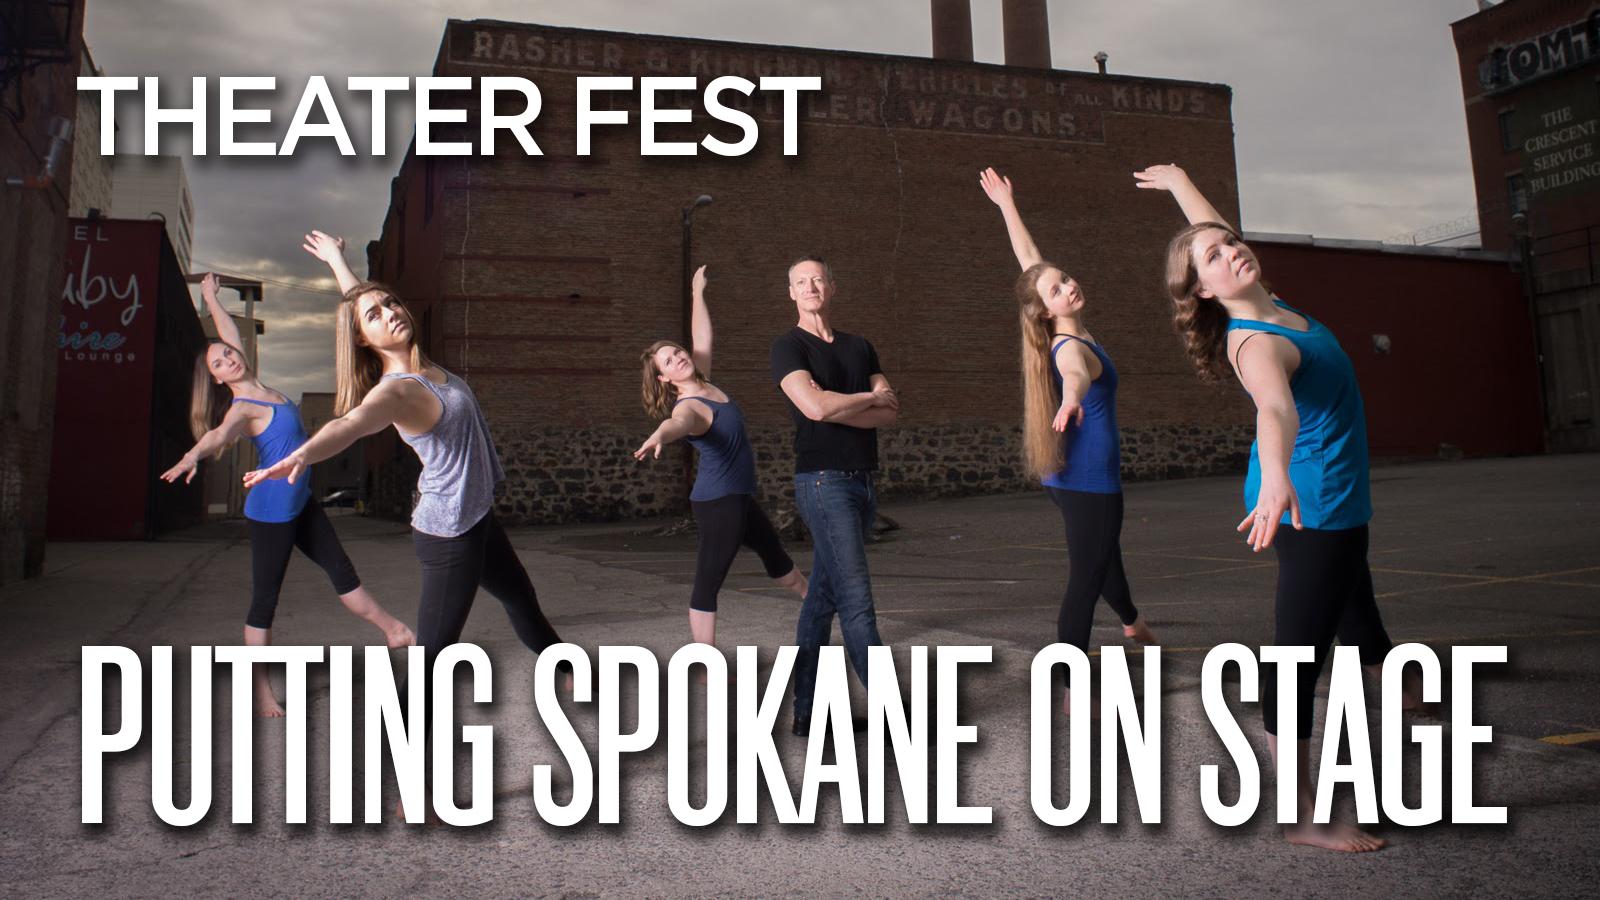 Theater Fest celebrates Spokane’s diverse performing arts community